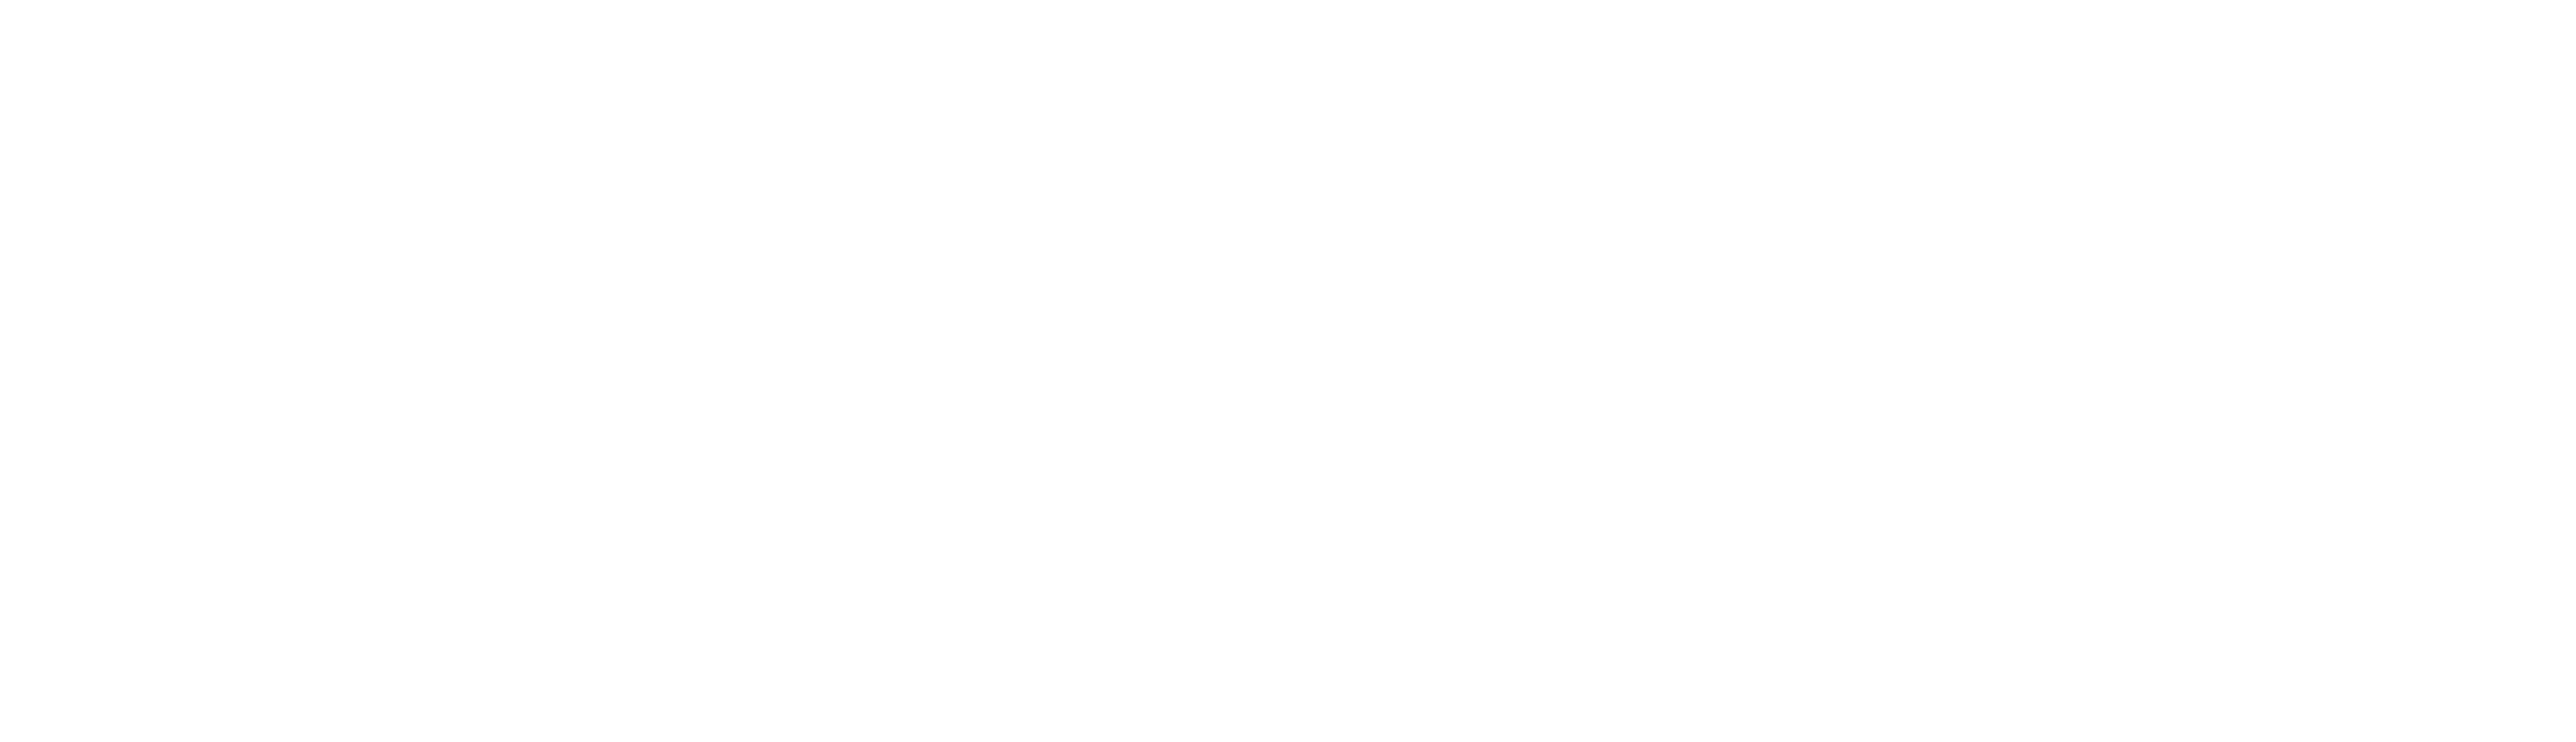 CagatayOzturk_Logo1-01